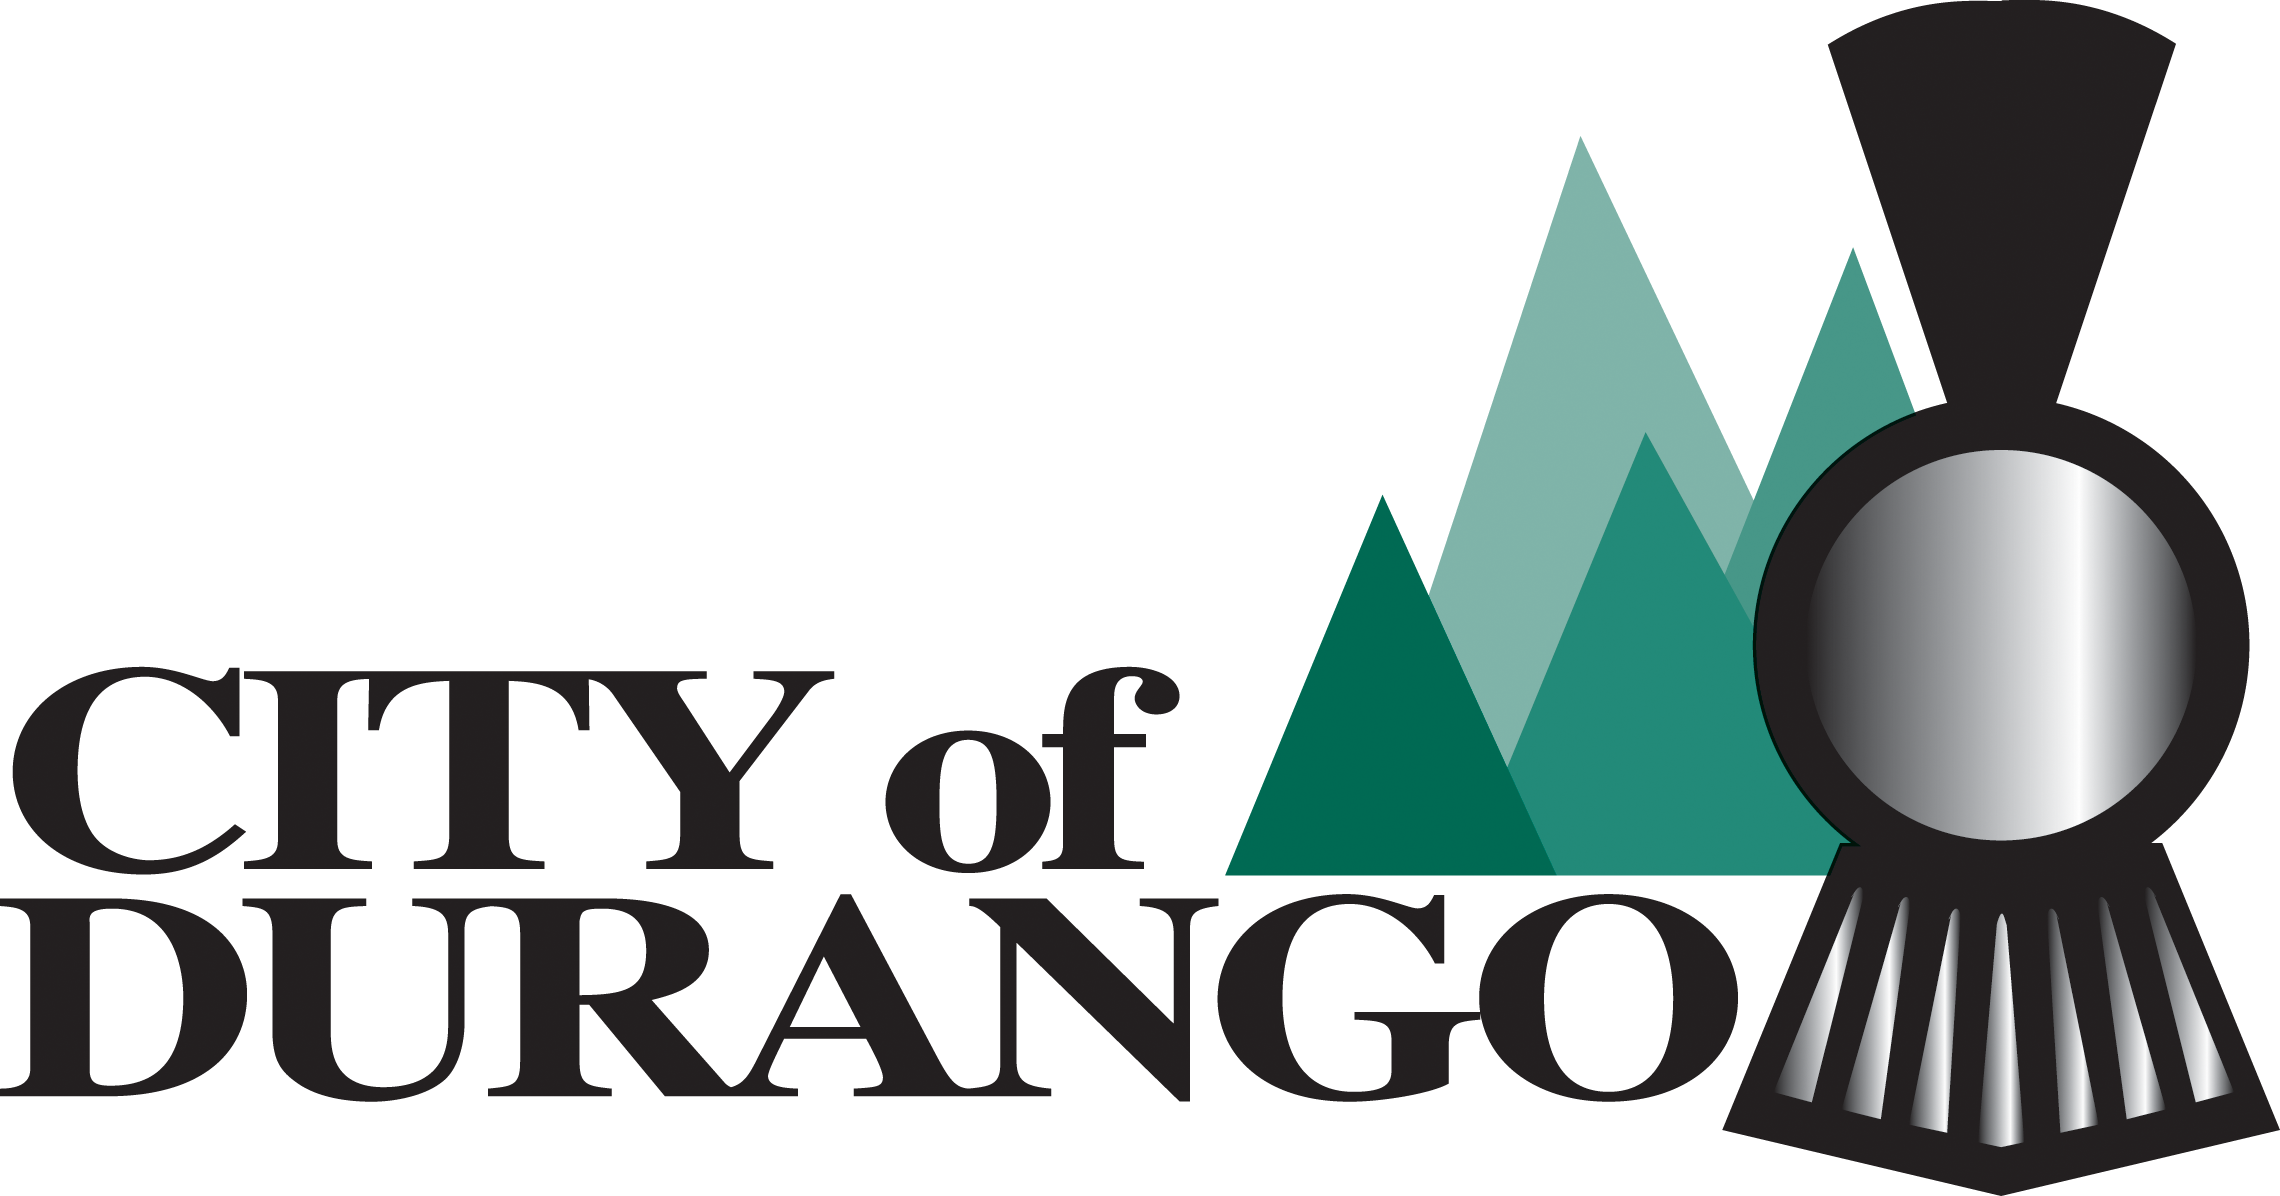 Image of City of Durango logo